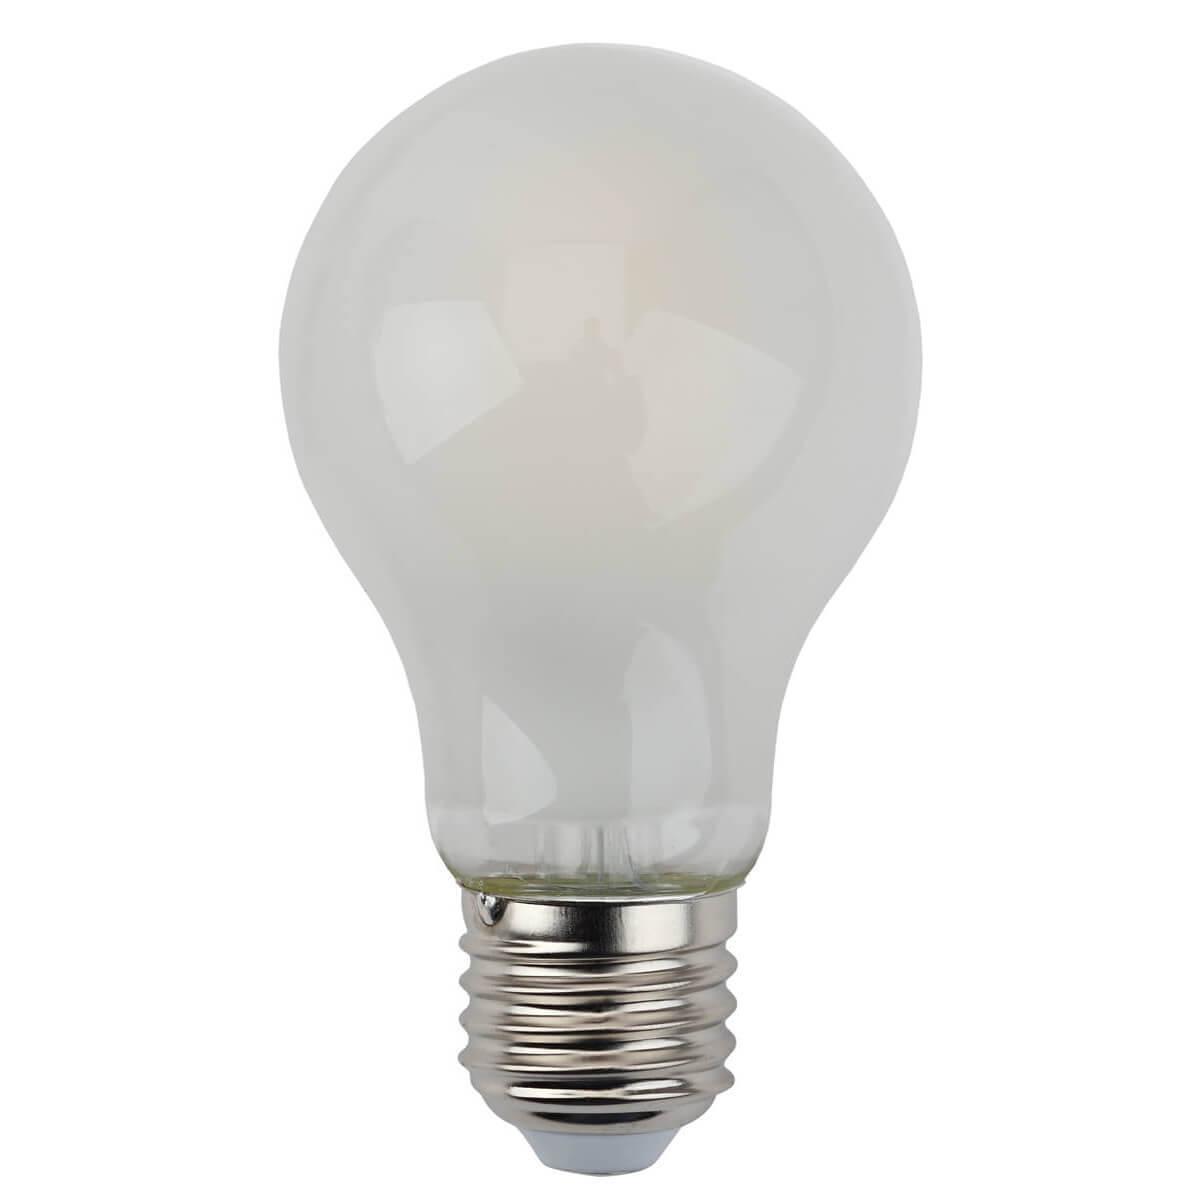 Светодиодные led лампы нейтрального света. Эра f-led a60-7w-840-e27. Лампа филаментная led e27. Лампочка Эра a60-13w-840-e27. Лампа светодиодная Эра f-led -7w-840-e27.